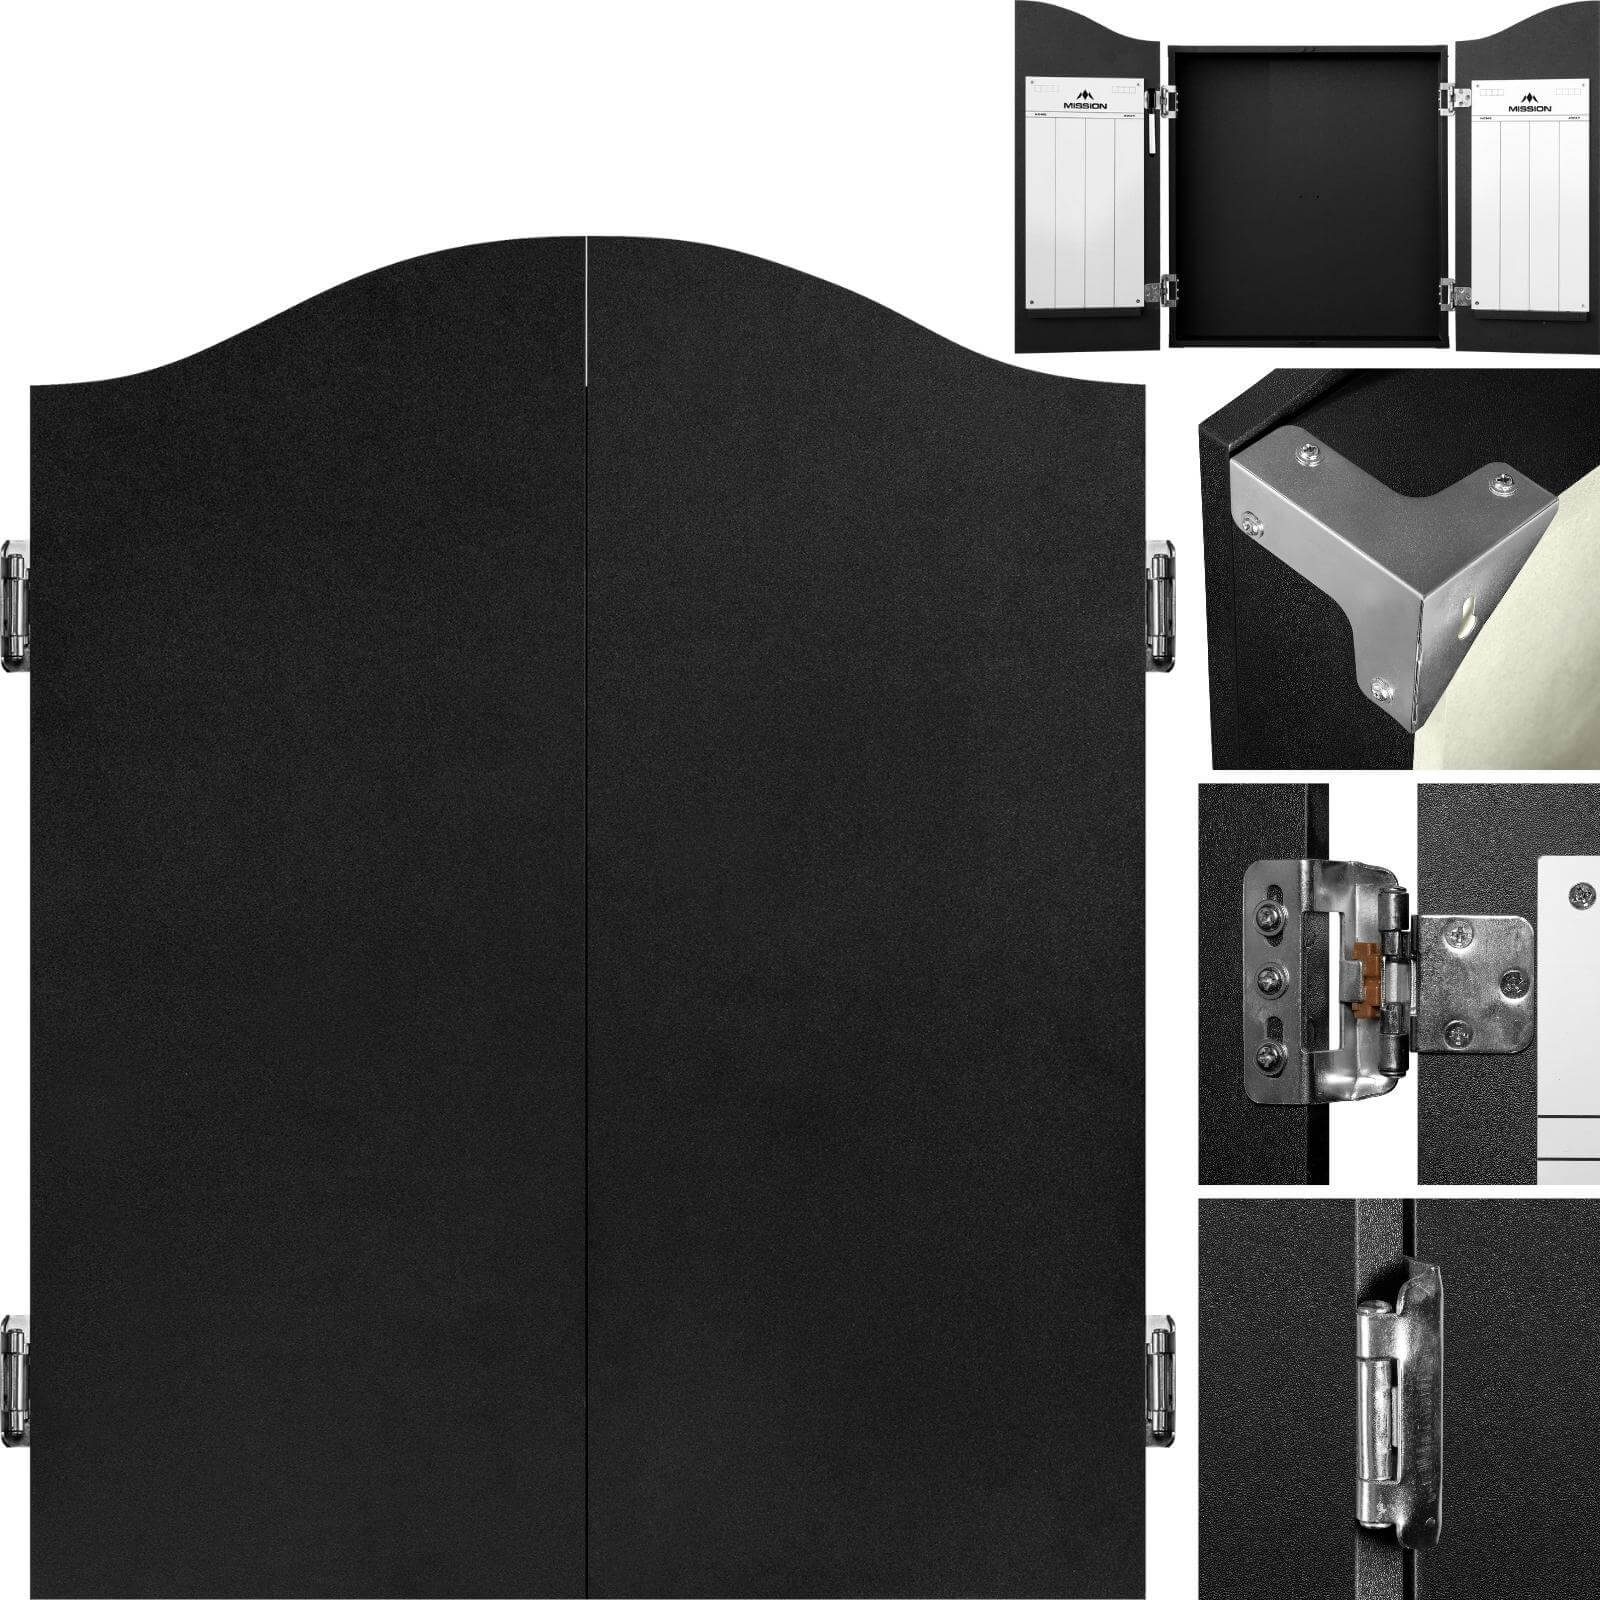 Dartboard Accessories - Mission - Dartboard Cabinet - Deluxe Quality - Plain Black 